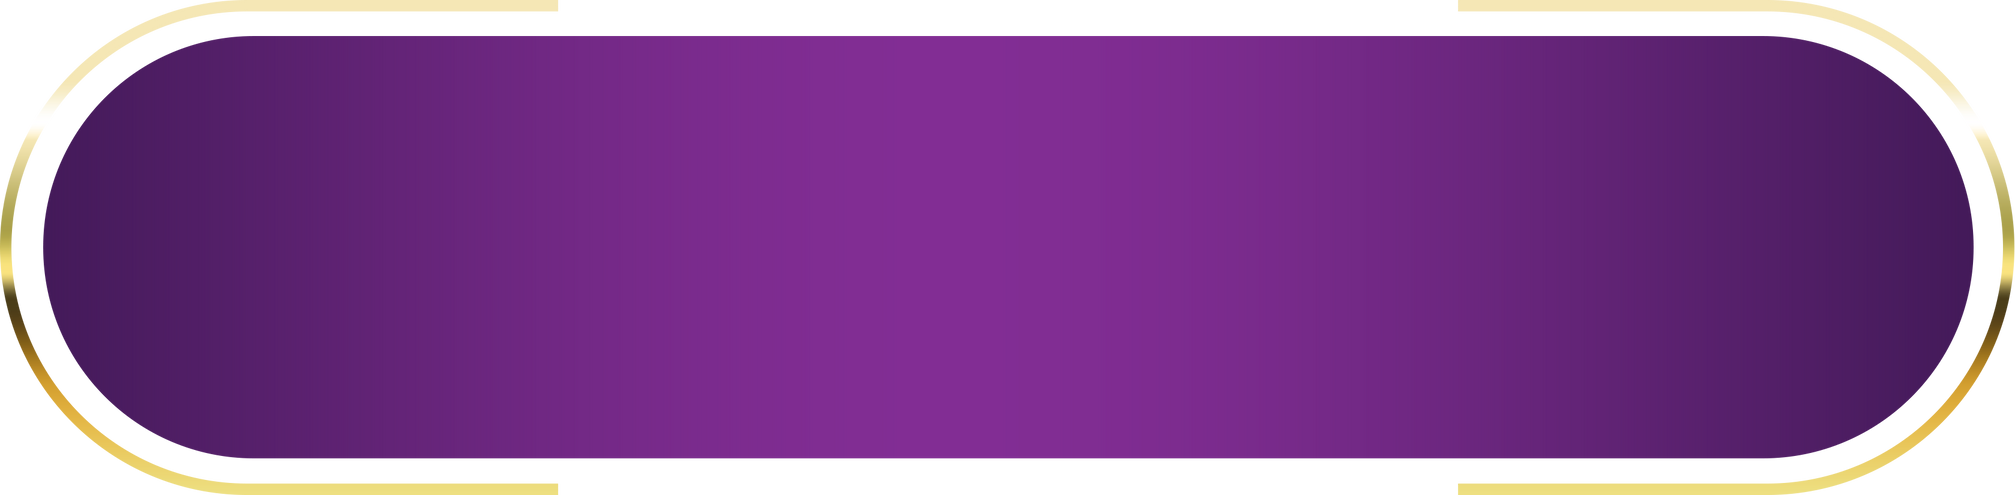 purple banner gold frame